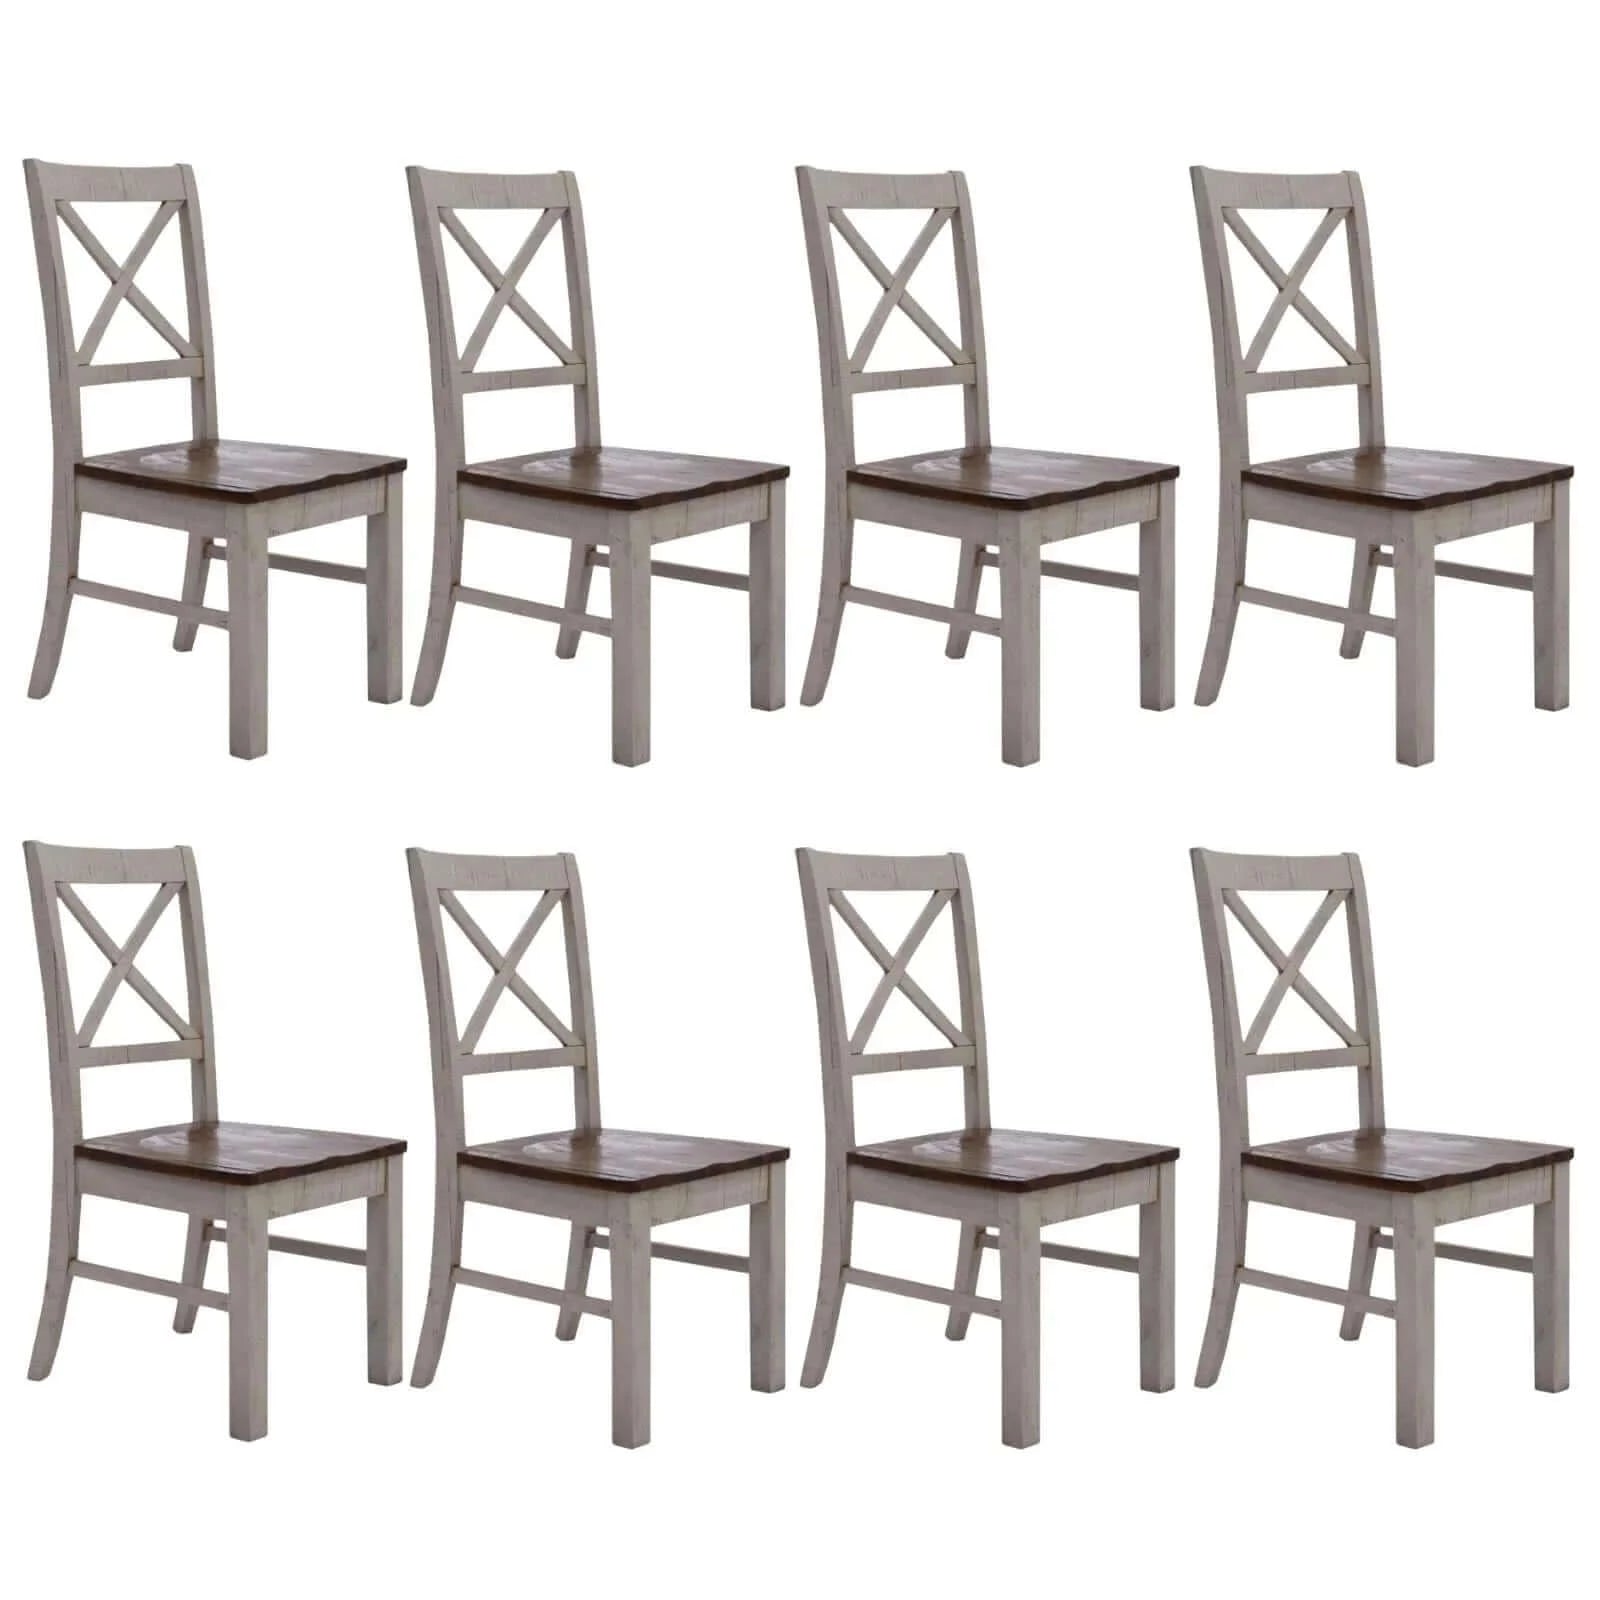 Buy erica x-back dining chair set of 8 solid acacia timber wood hampton brown white - upinteriors-Upinteriors